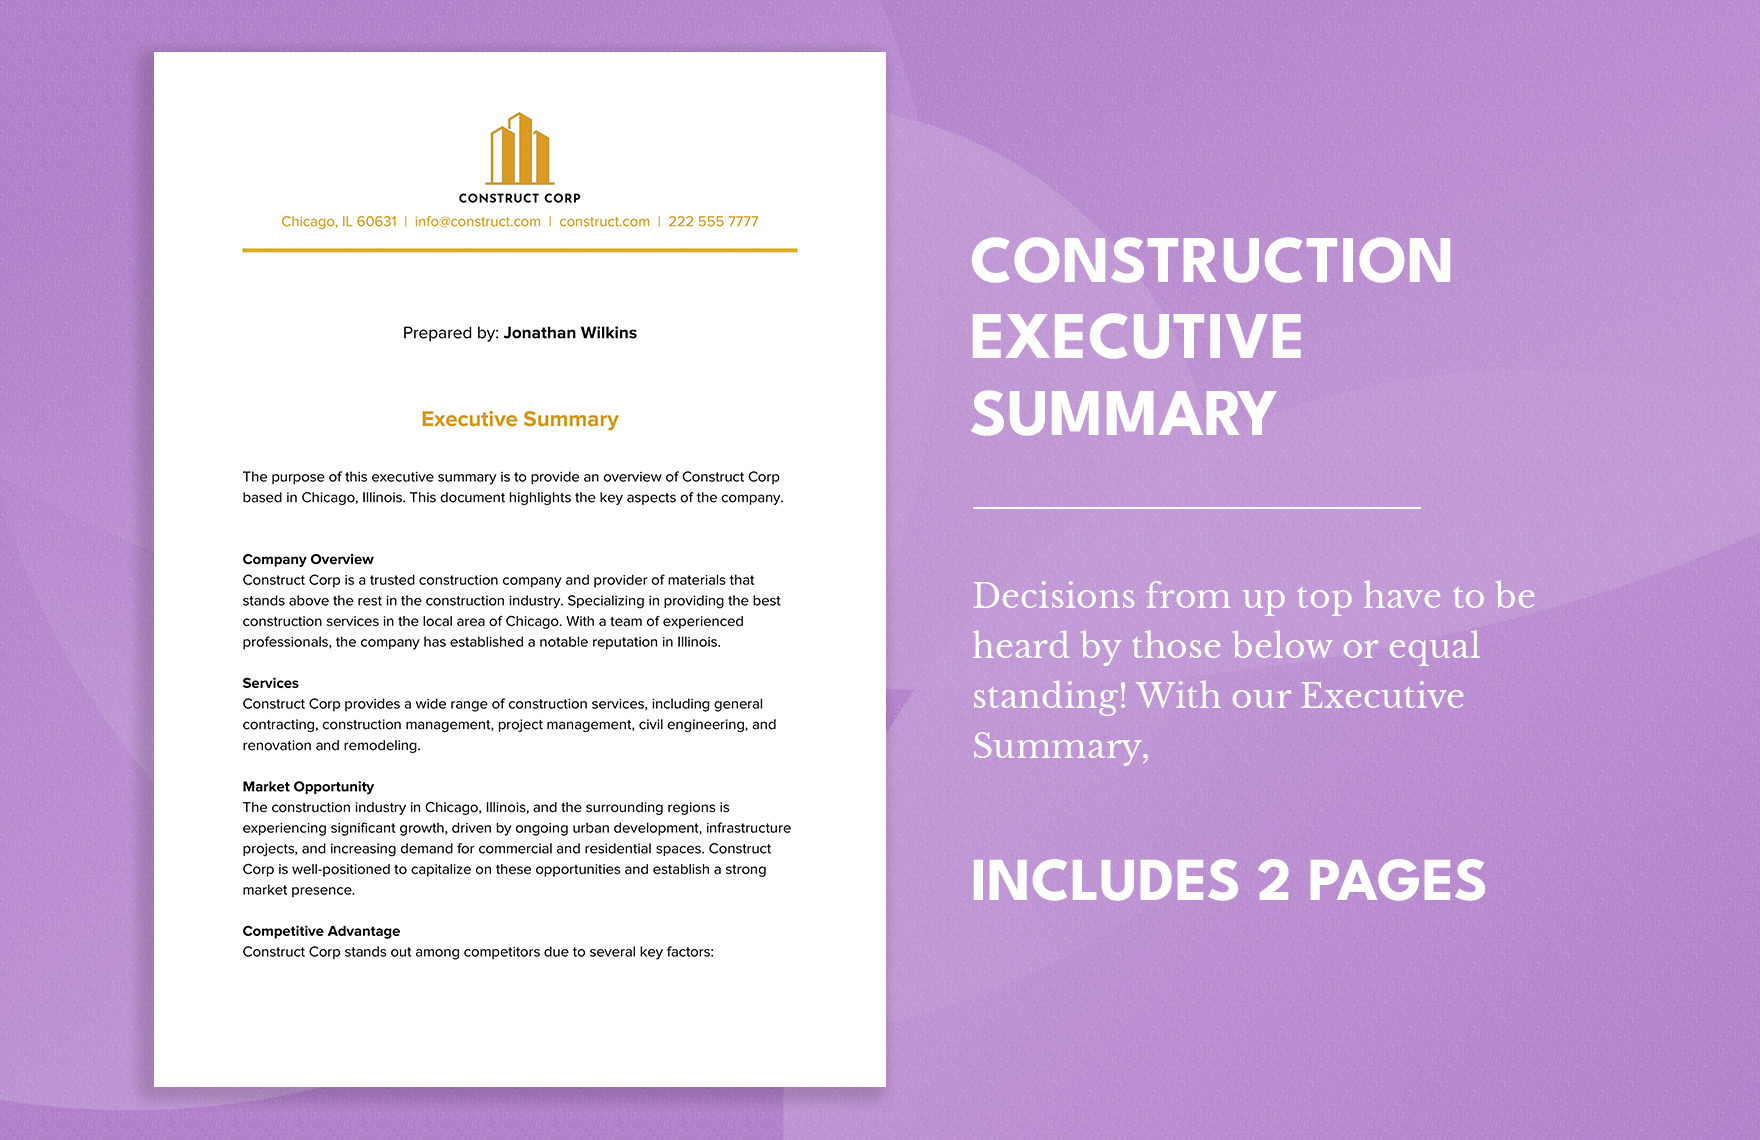 Construction Executive Summary in Word, Google Docs